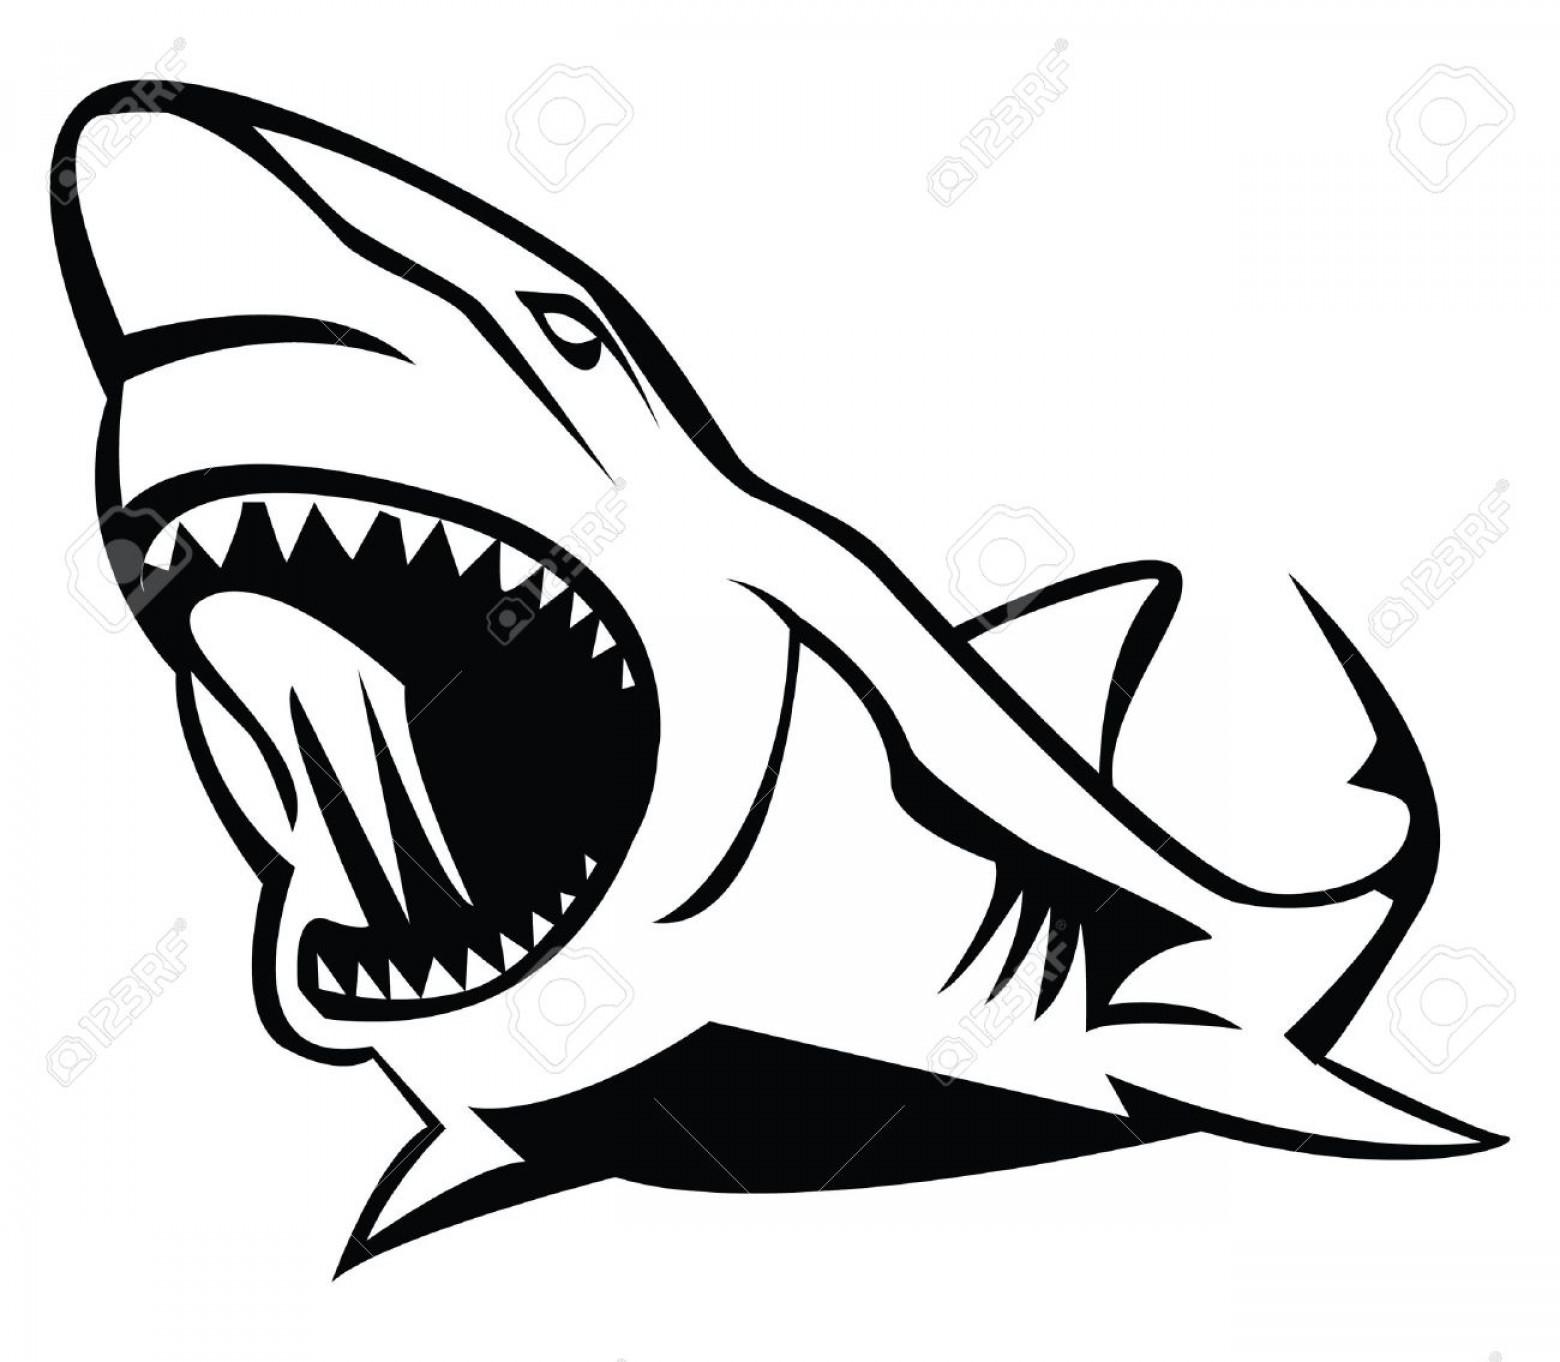 free vector clipart shark no sign up cartoon